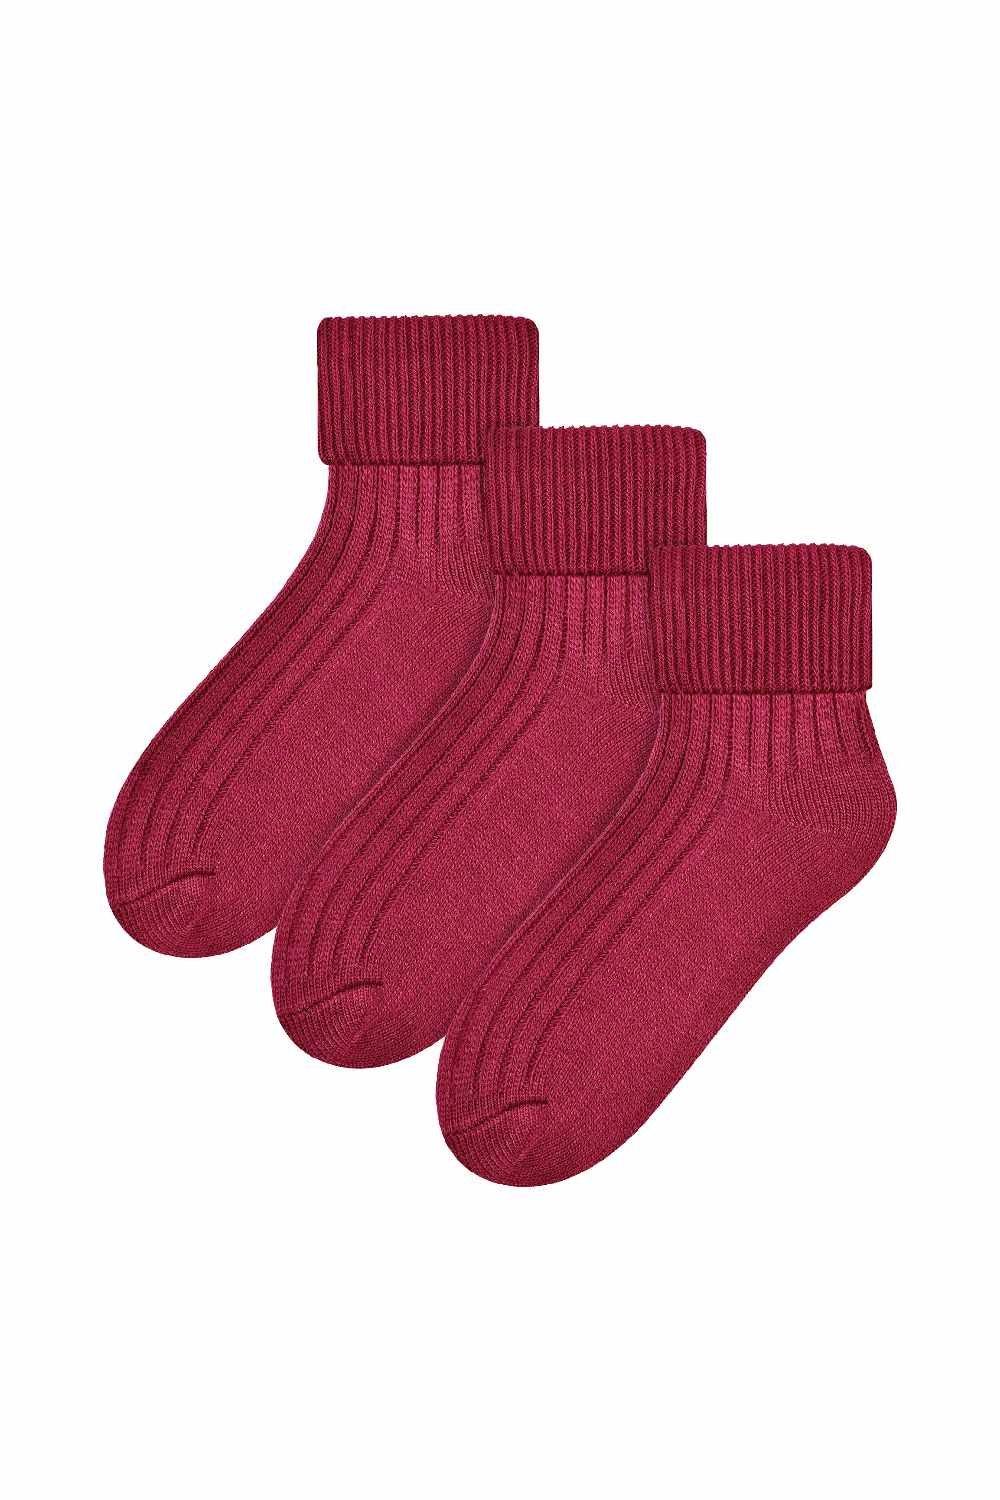 3 Pairs Wool Bed Socks Luxury Warm Fuzzy Lounge Sleep Socks